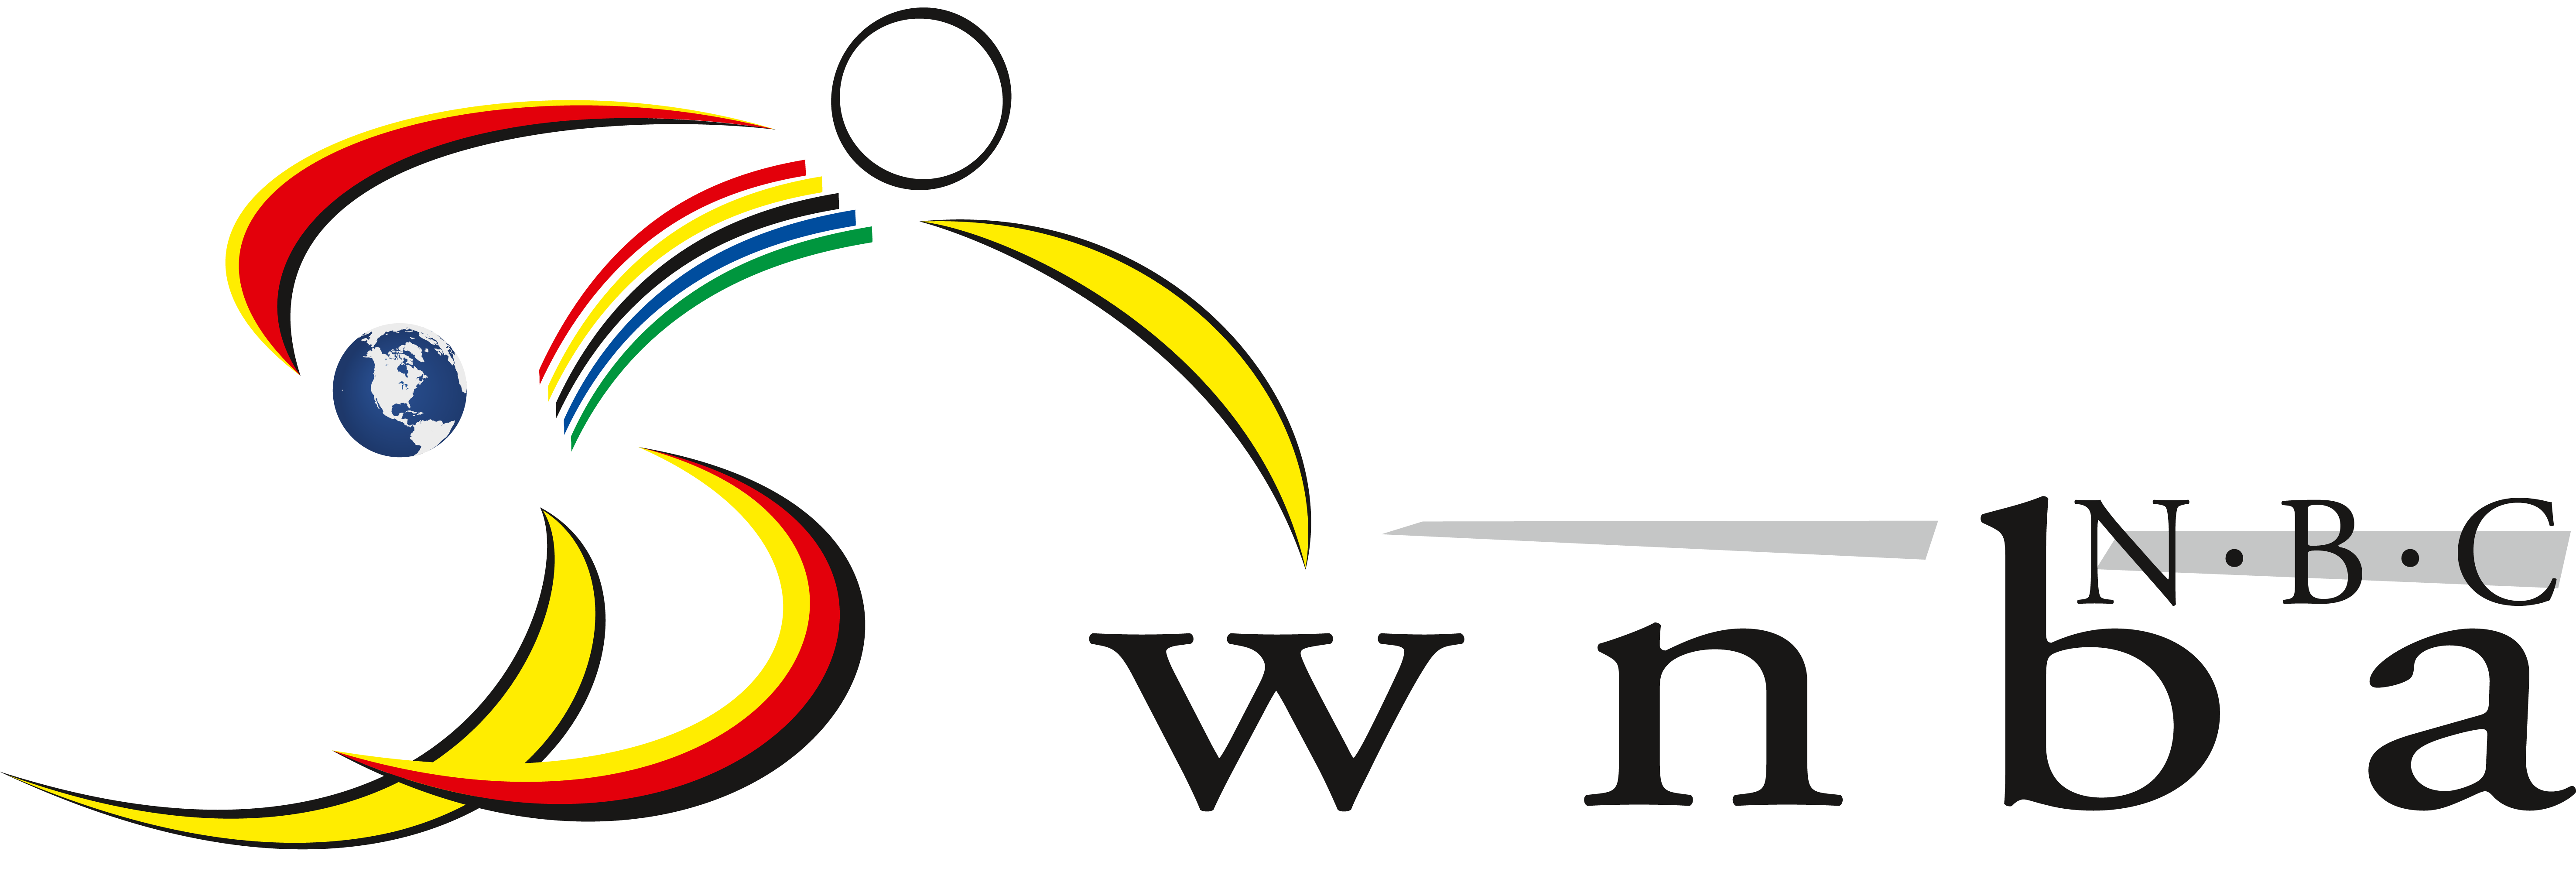 Wm logo wnba nbc